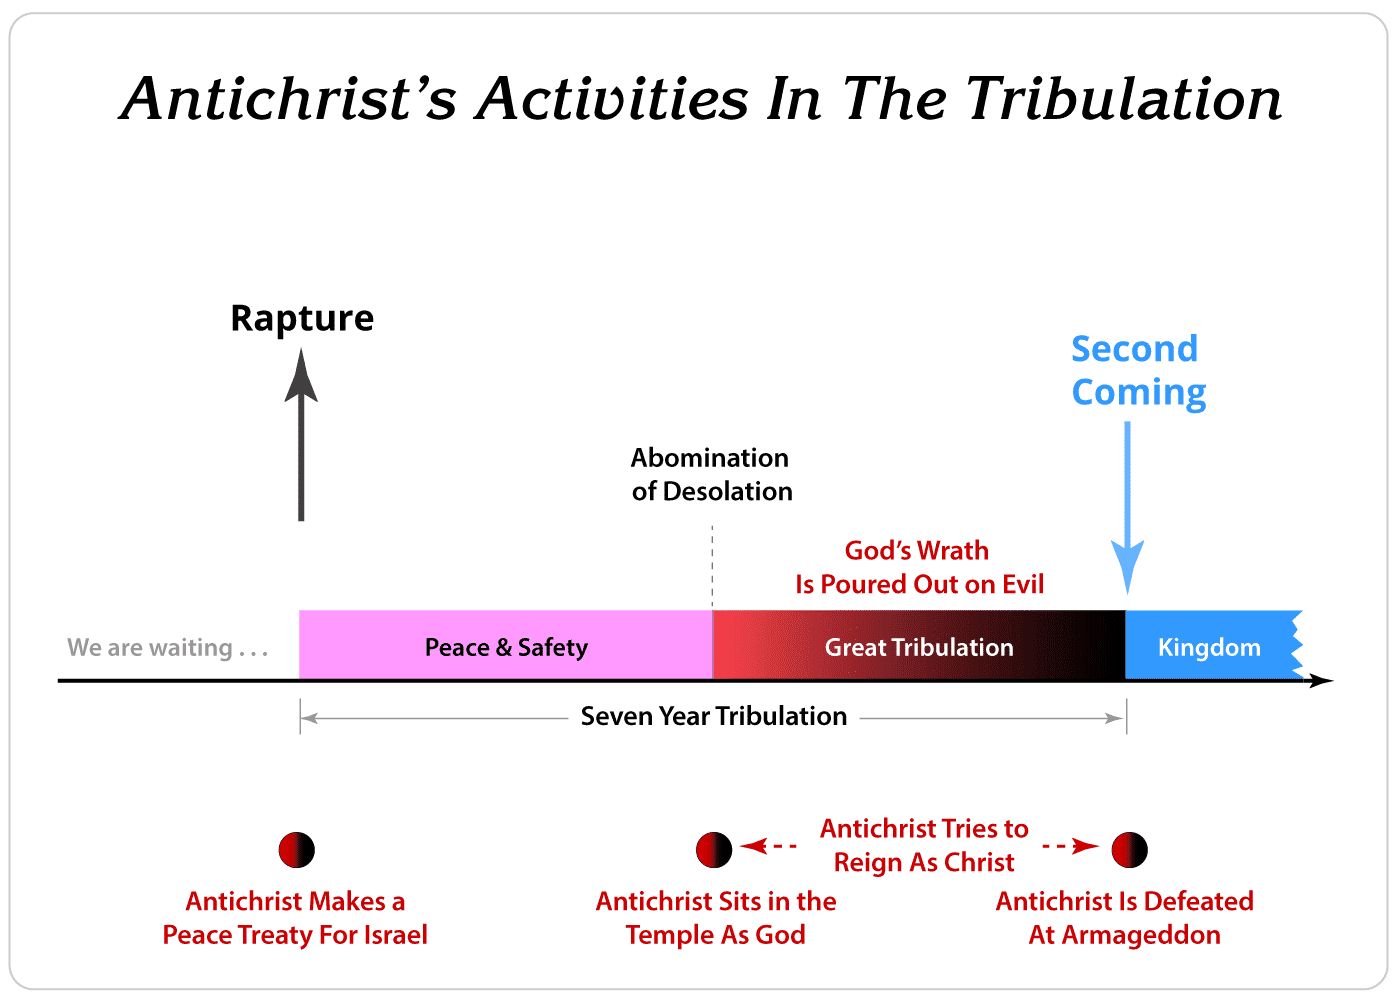 Antichrist's Activities in Tribulation